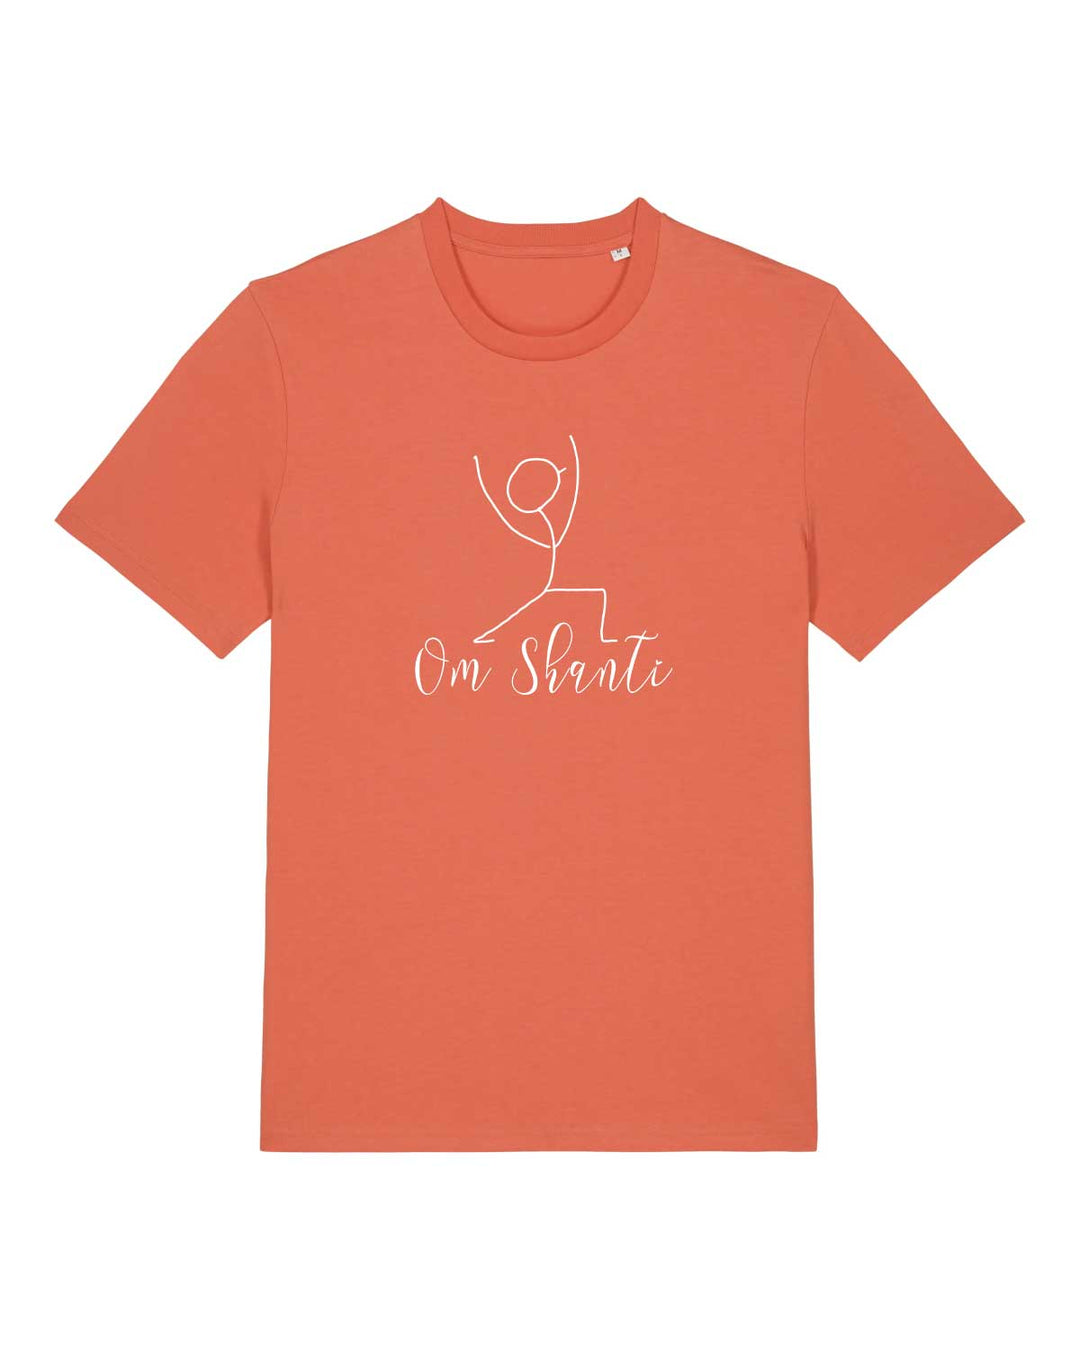 Unisex Yoga T-Shirt "Om Shanti"